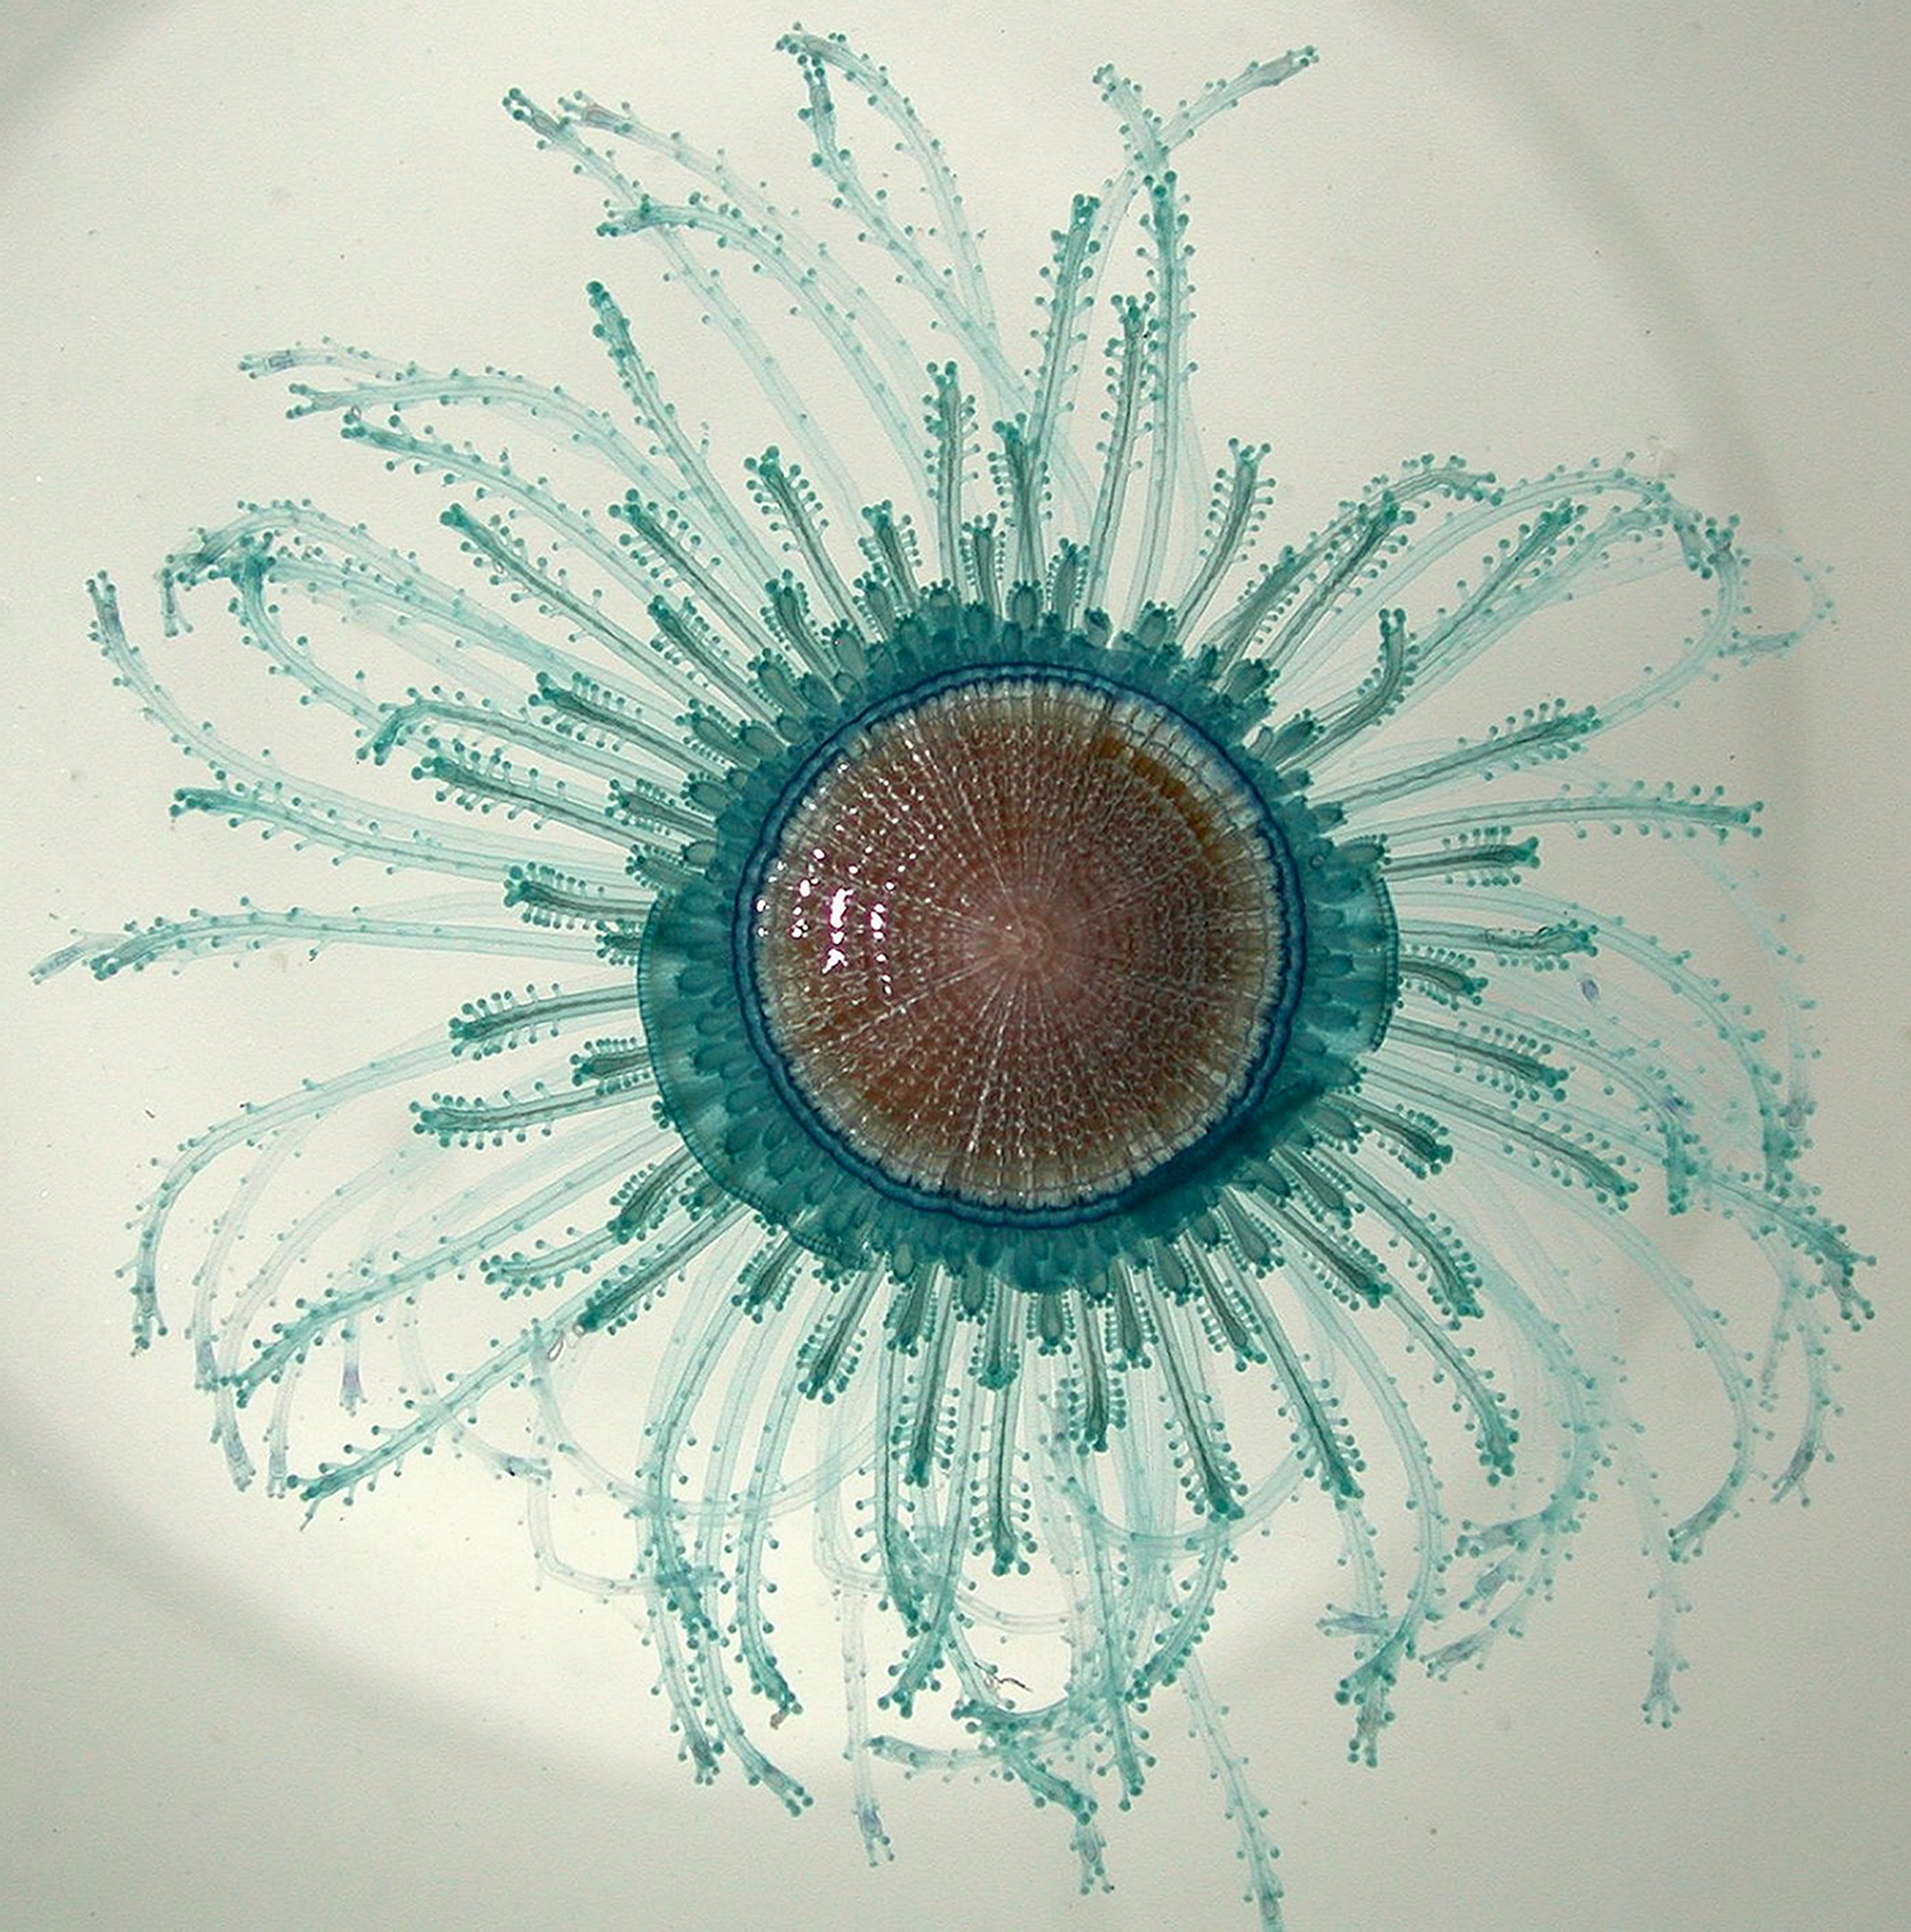 Blue Button Jellyfish (Porpita porpita)